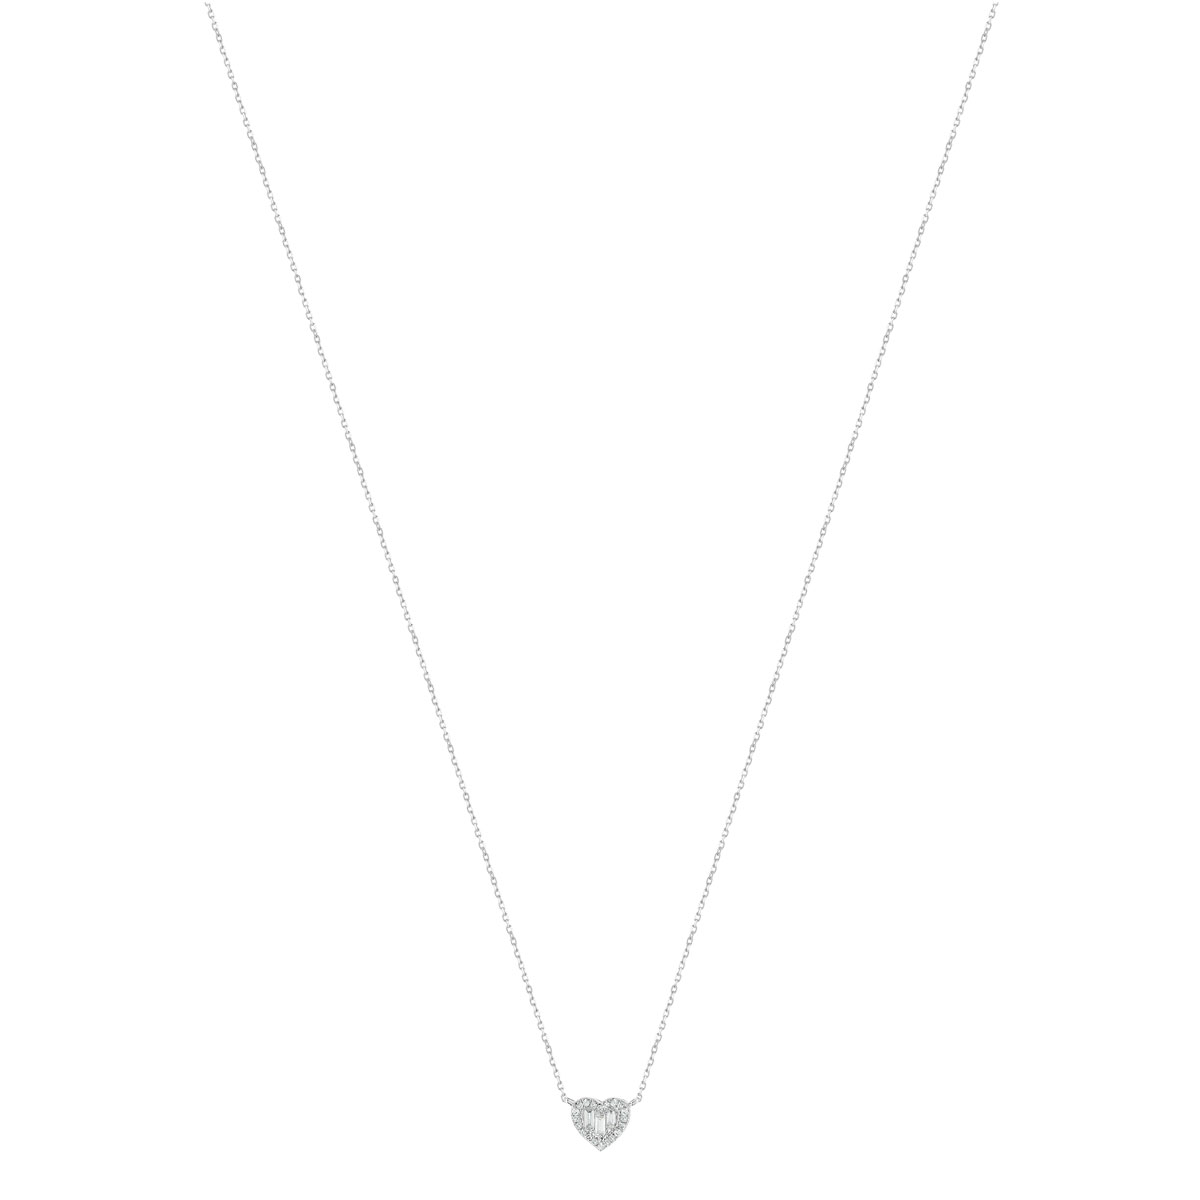 Collier or 375 blanc coeur diamant 45 cm